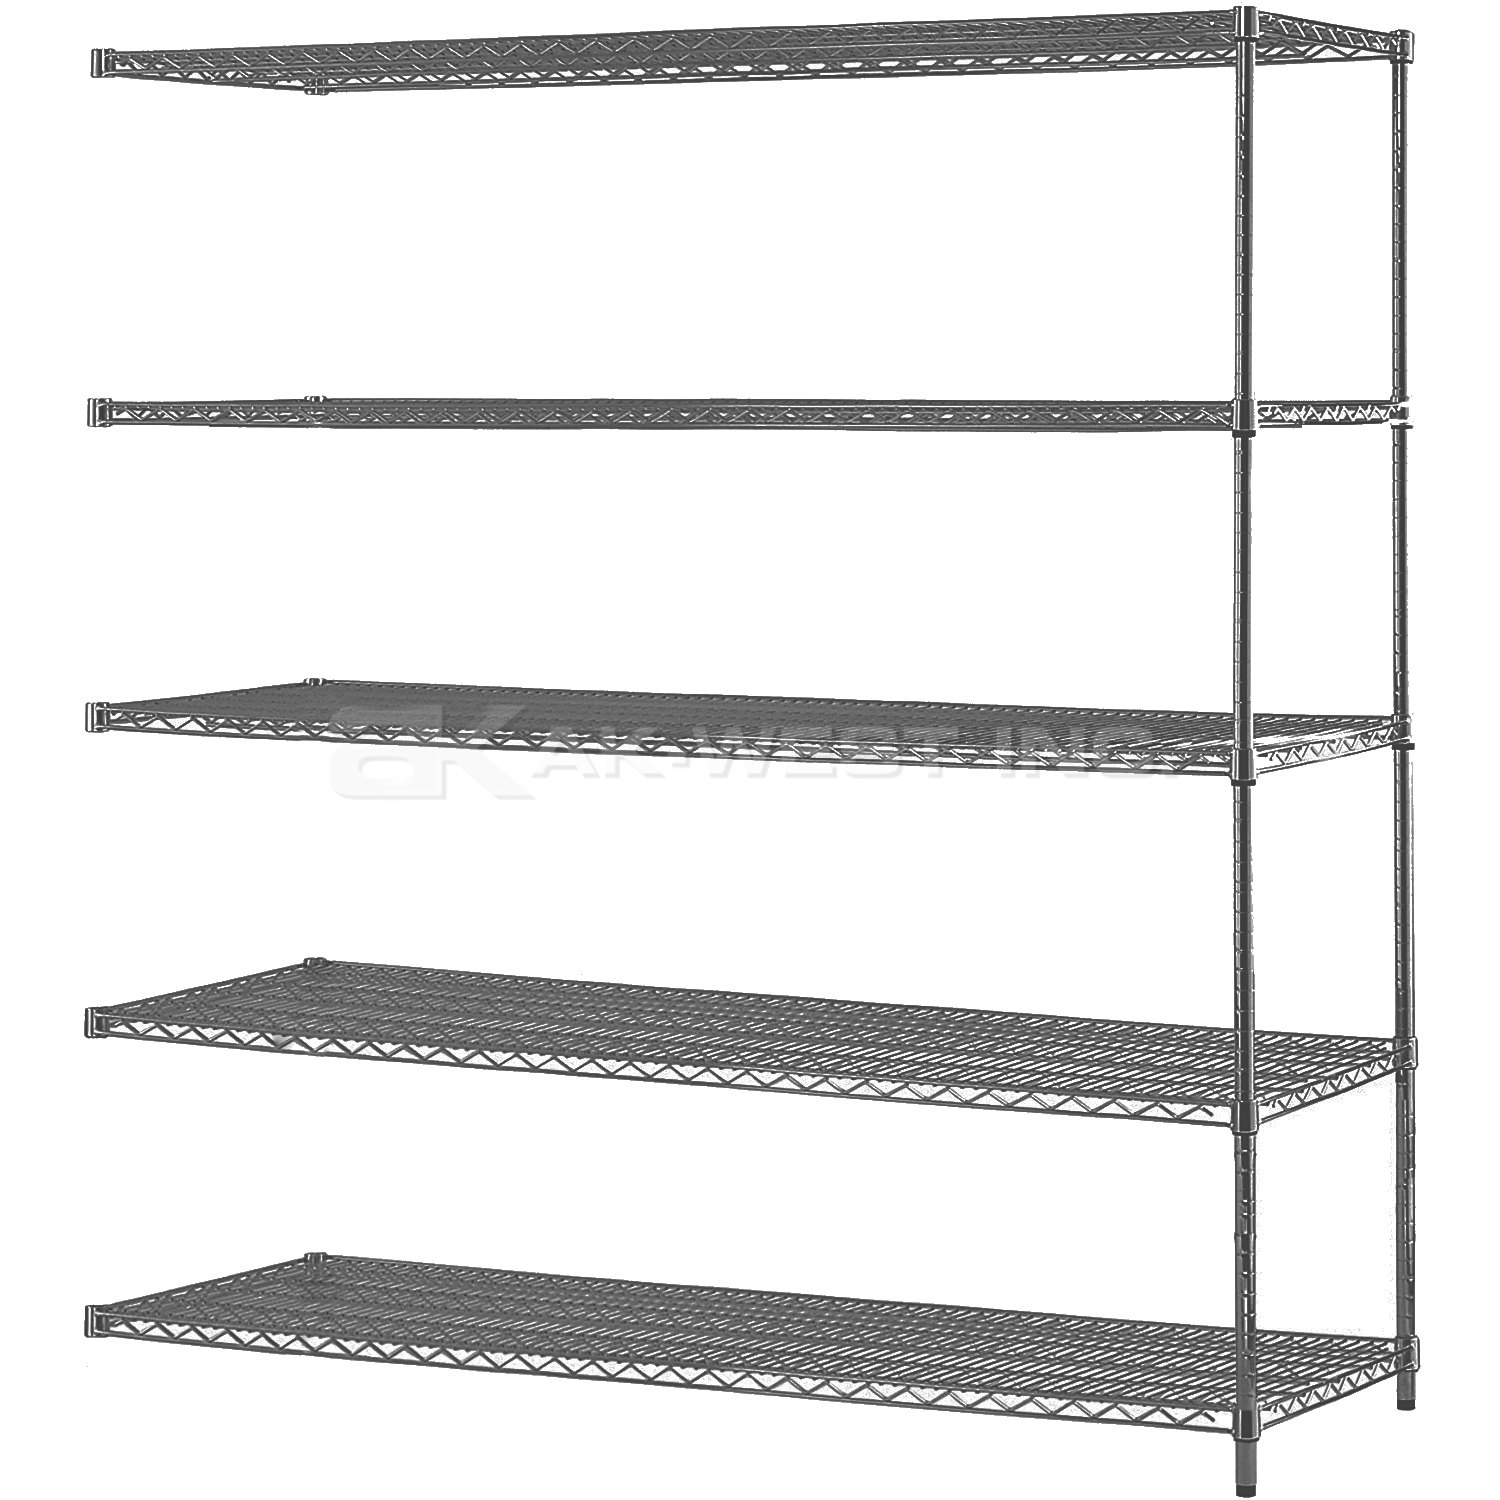 Grey, 24"D x 72"W x 86"H, 6 Shelf, Wire Shelving Adder Kit